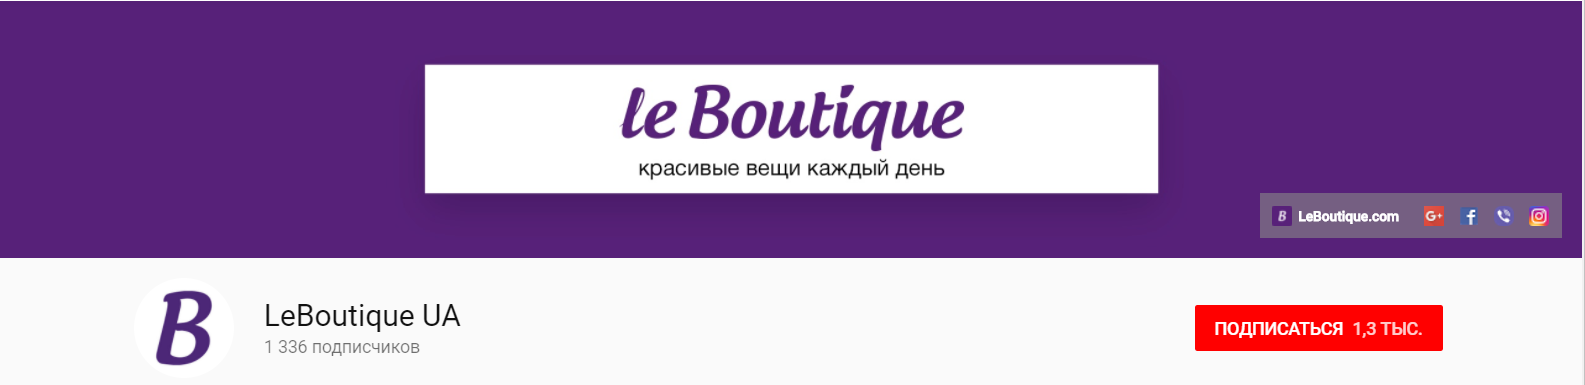 leBoutique - идеи для фона YouTube-канала